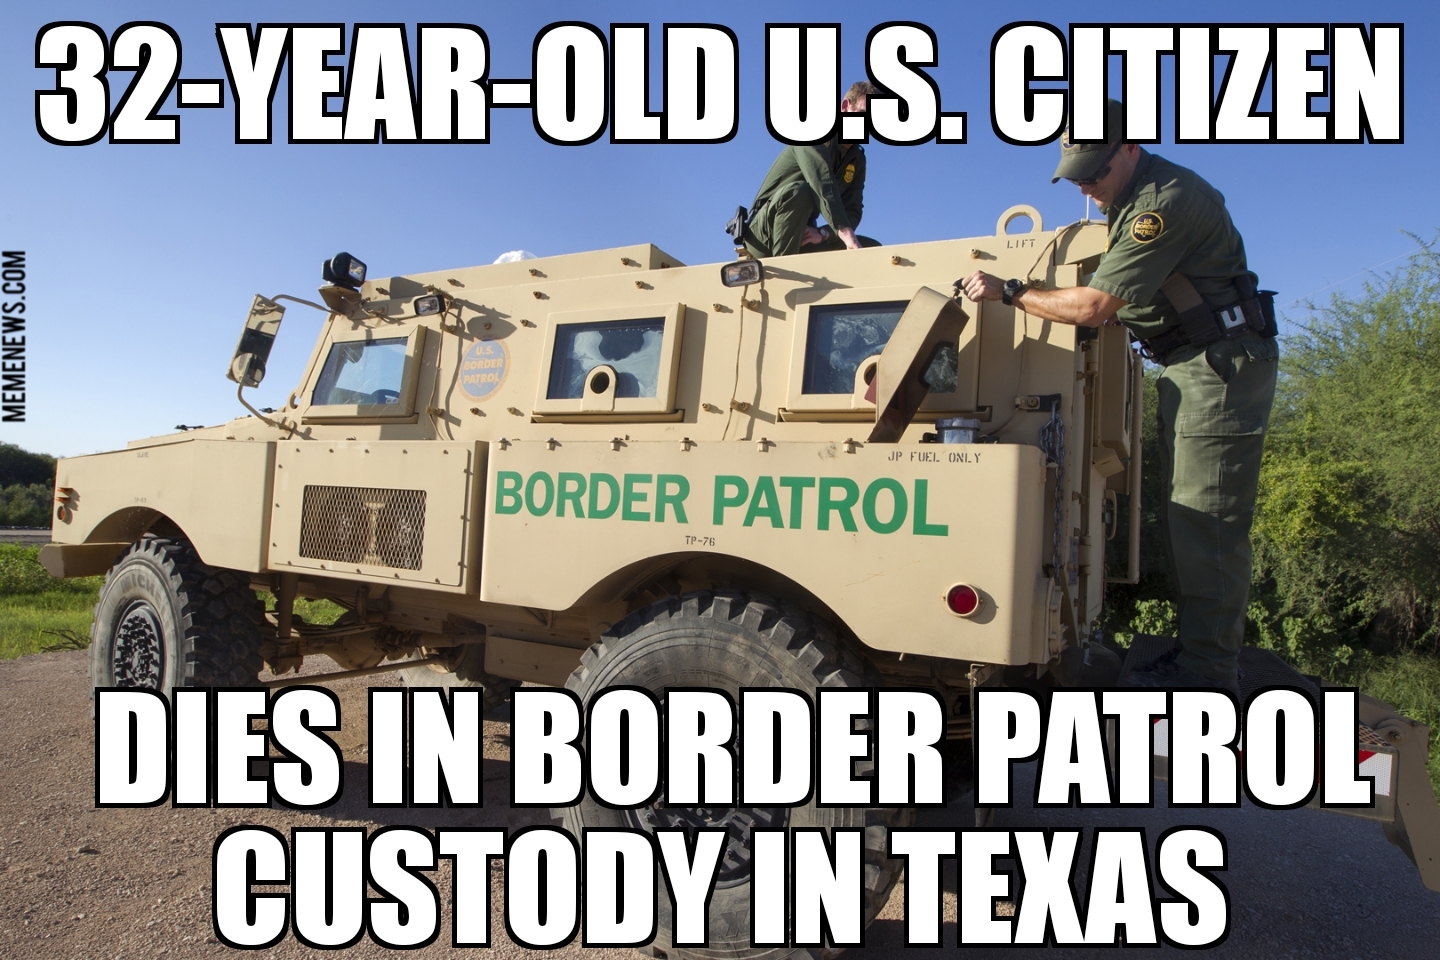 U.S. citizen dies in Border Patrol custody